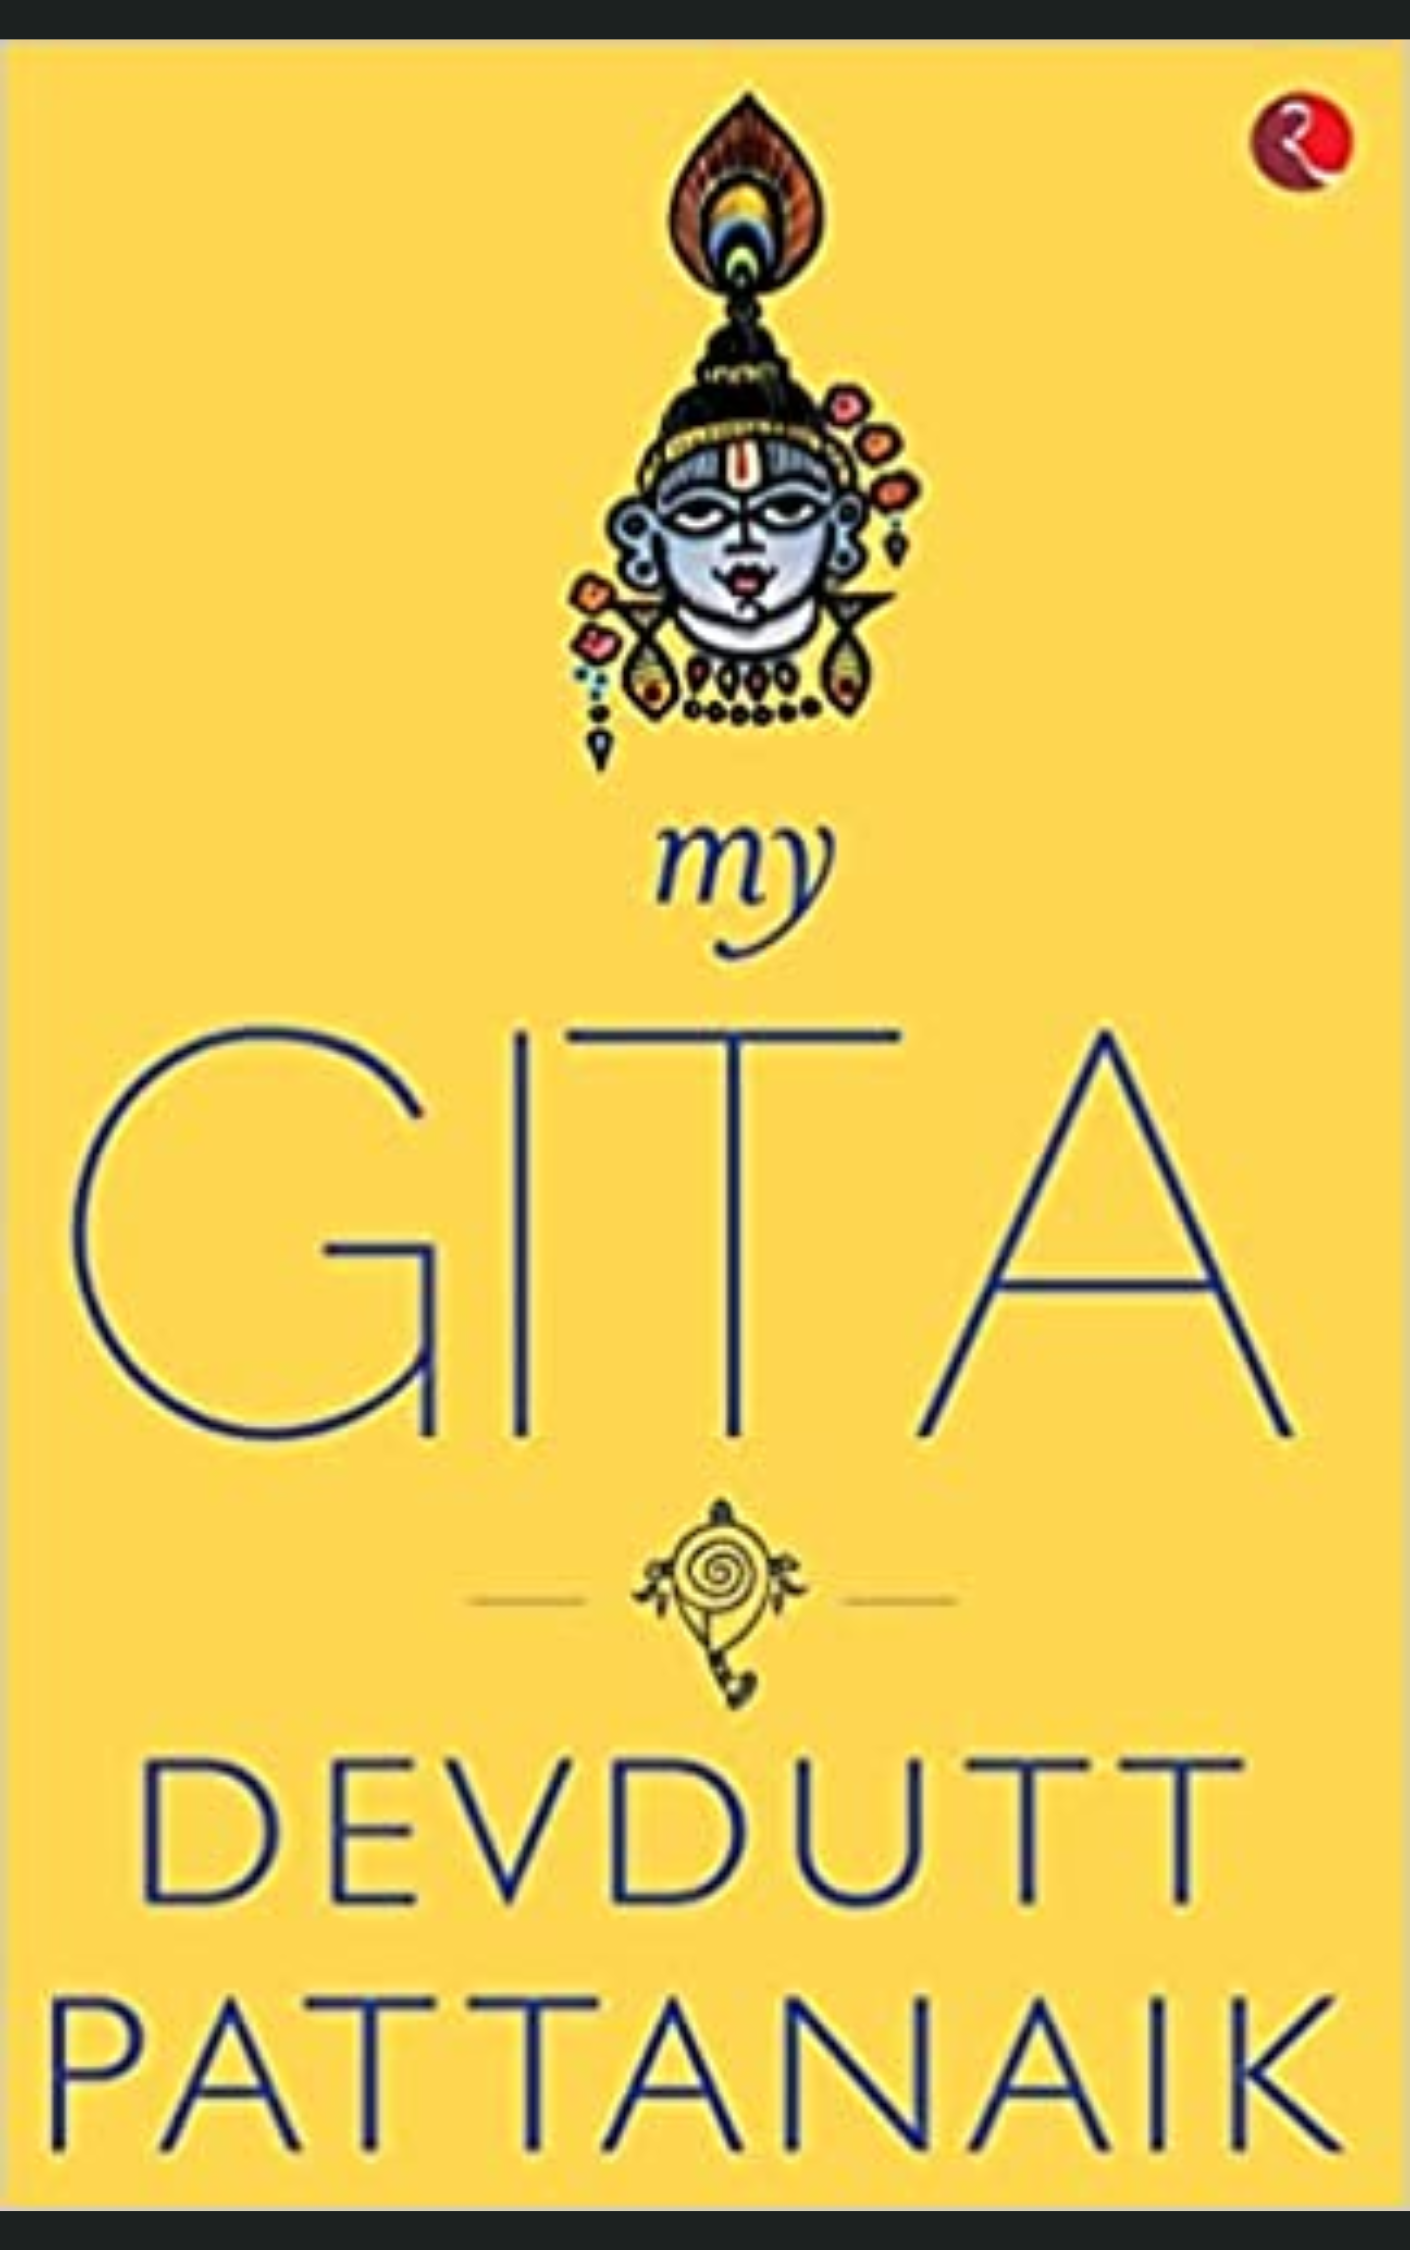 MY GITA by DEVDUTT PATTANAIK